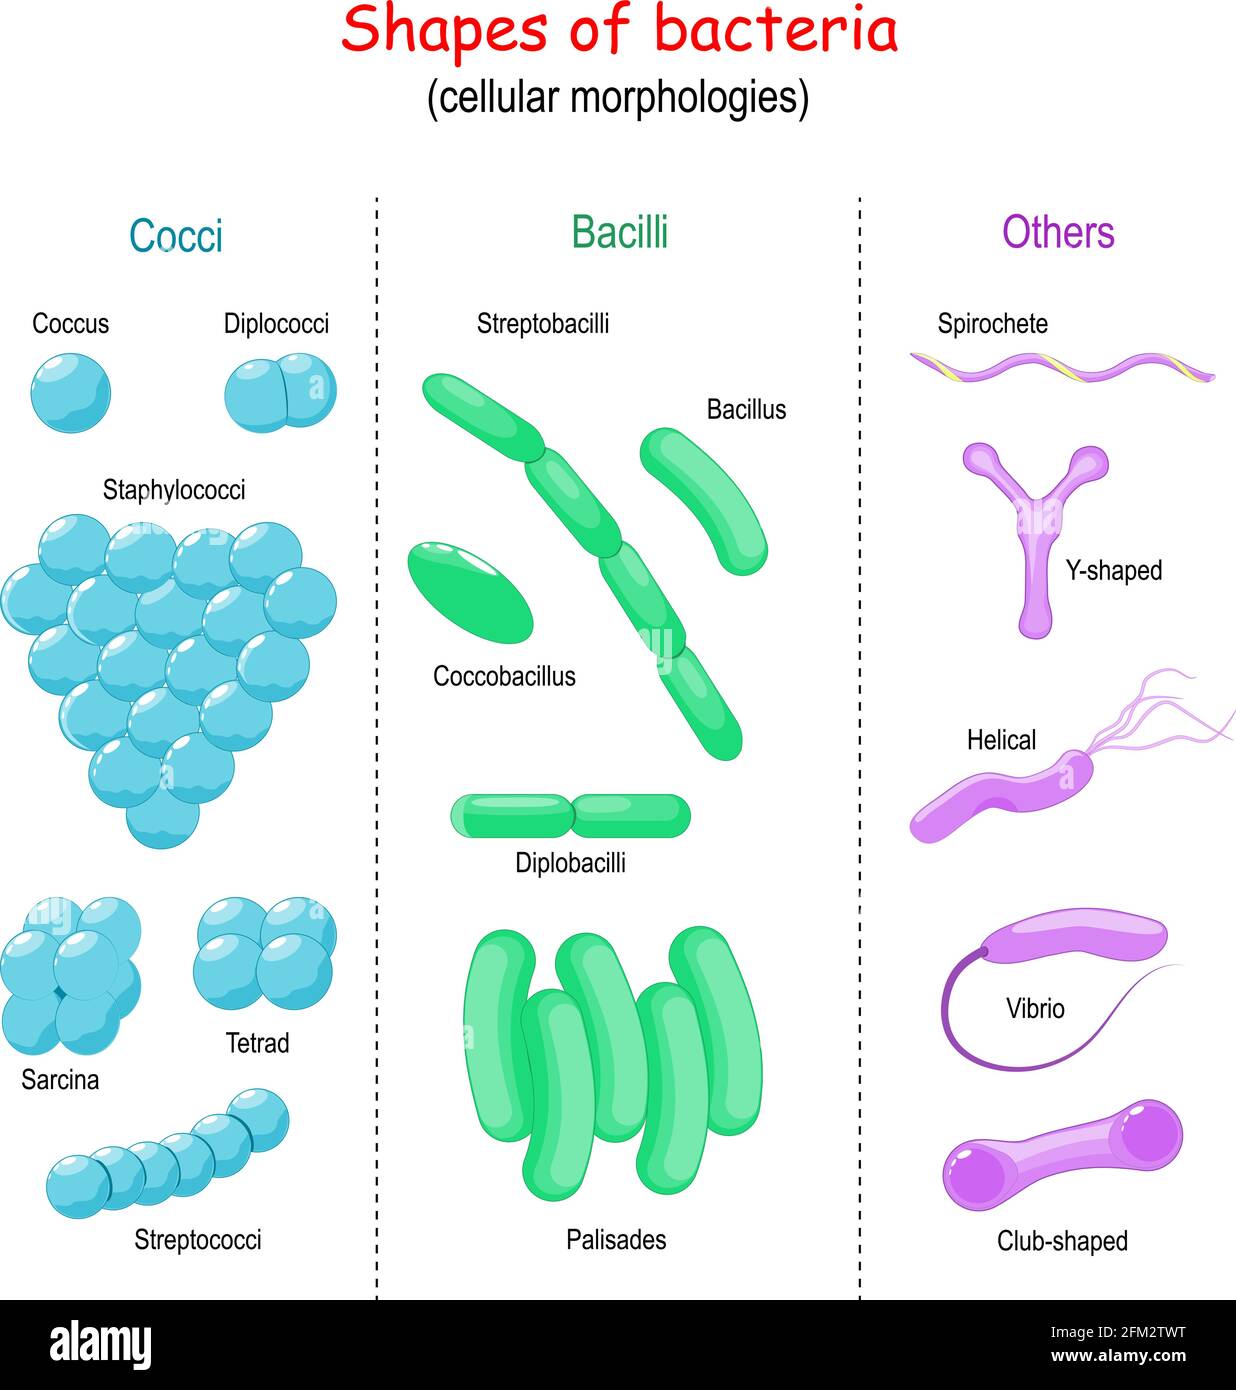 Formen von Bakterien. Zelluläre Morphologien: Bazillen, Cocci, andere (Vibrio, Helical, Y-förmig, Spirochete, Club-förmig). Stock Vektor